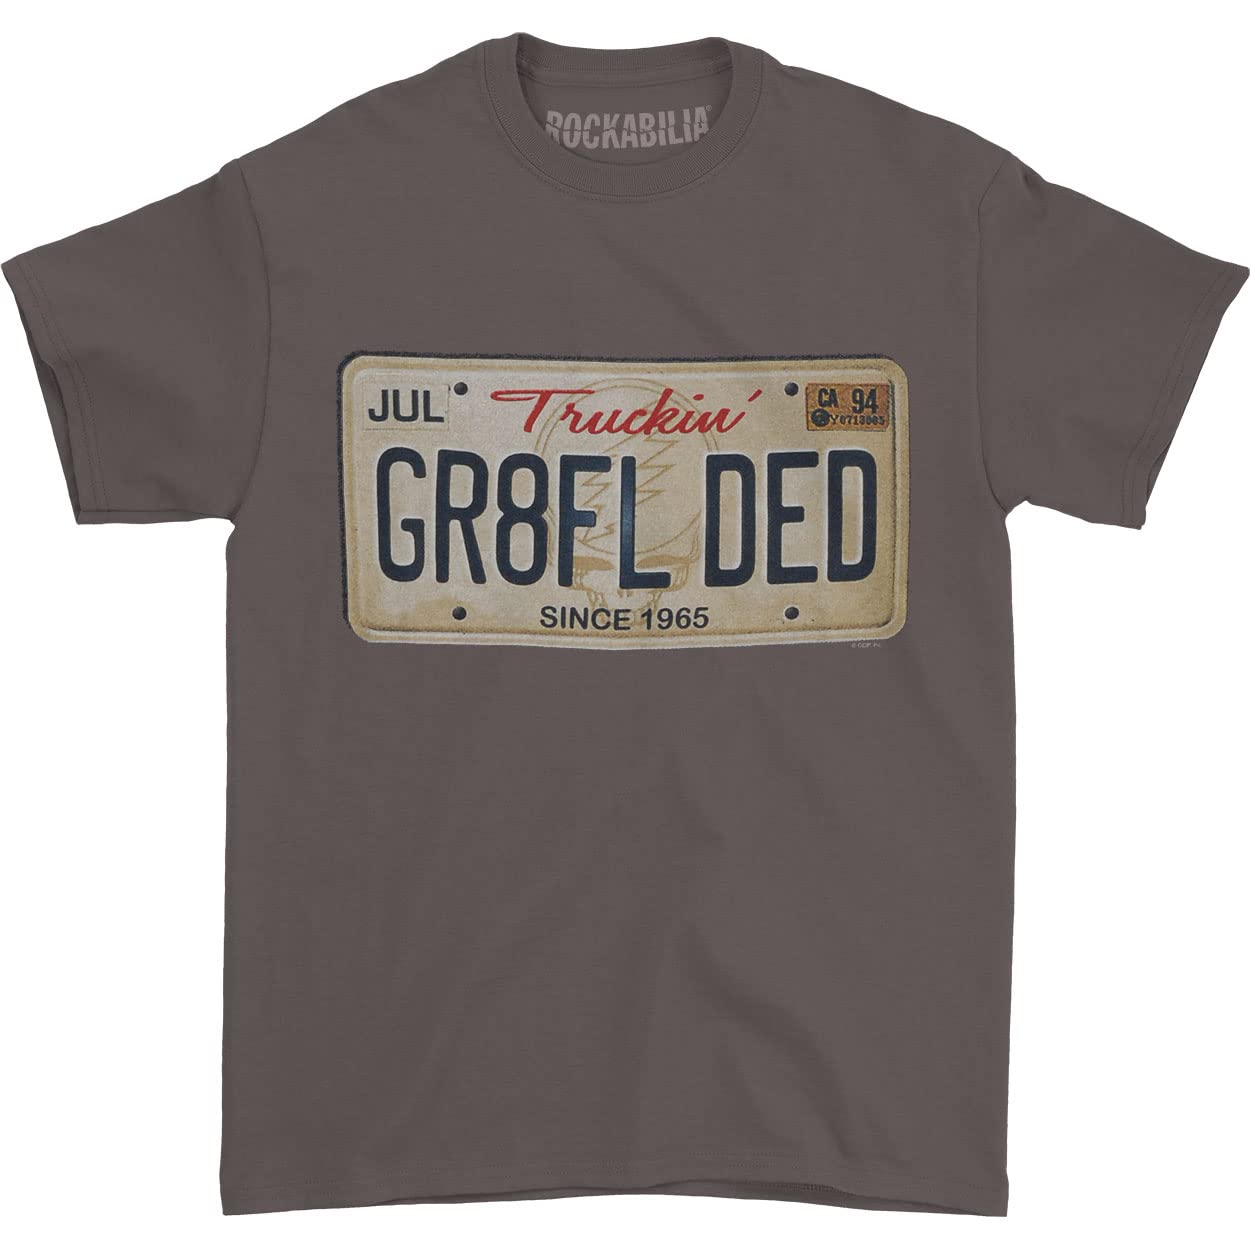 Liquid Blue Men's Grateful Dead Plate T-Shirt